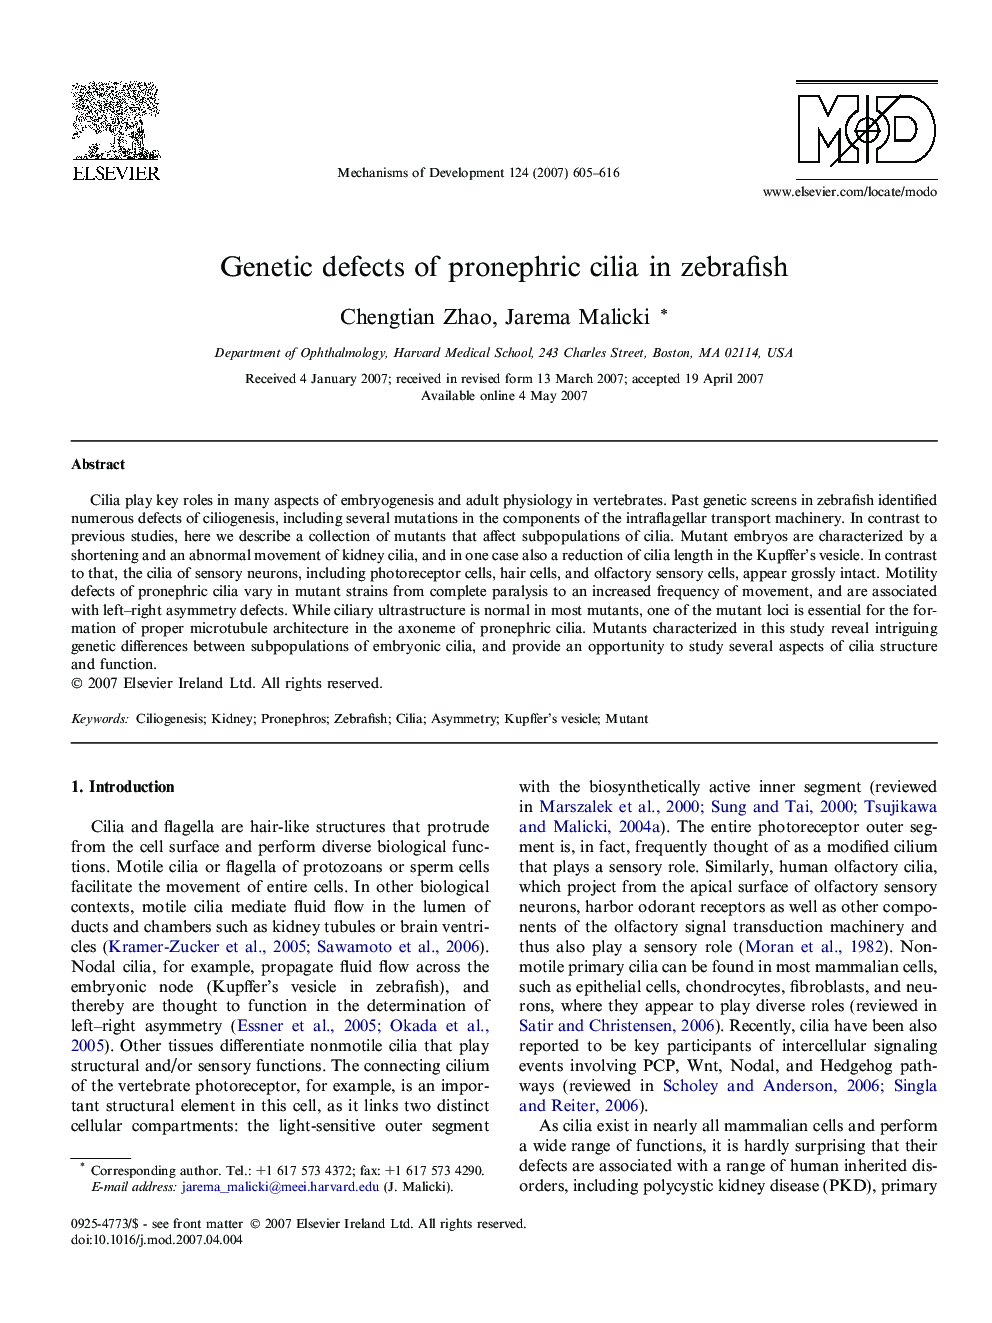 Genetic defects of pronephric cilia in zebrafish